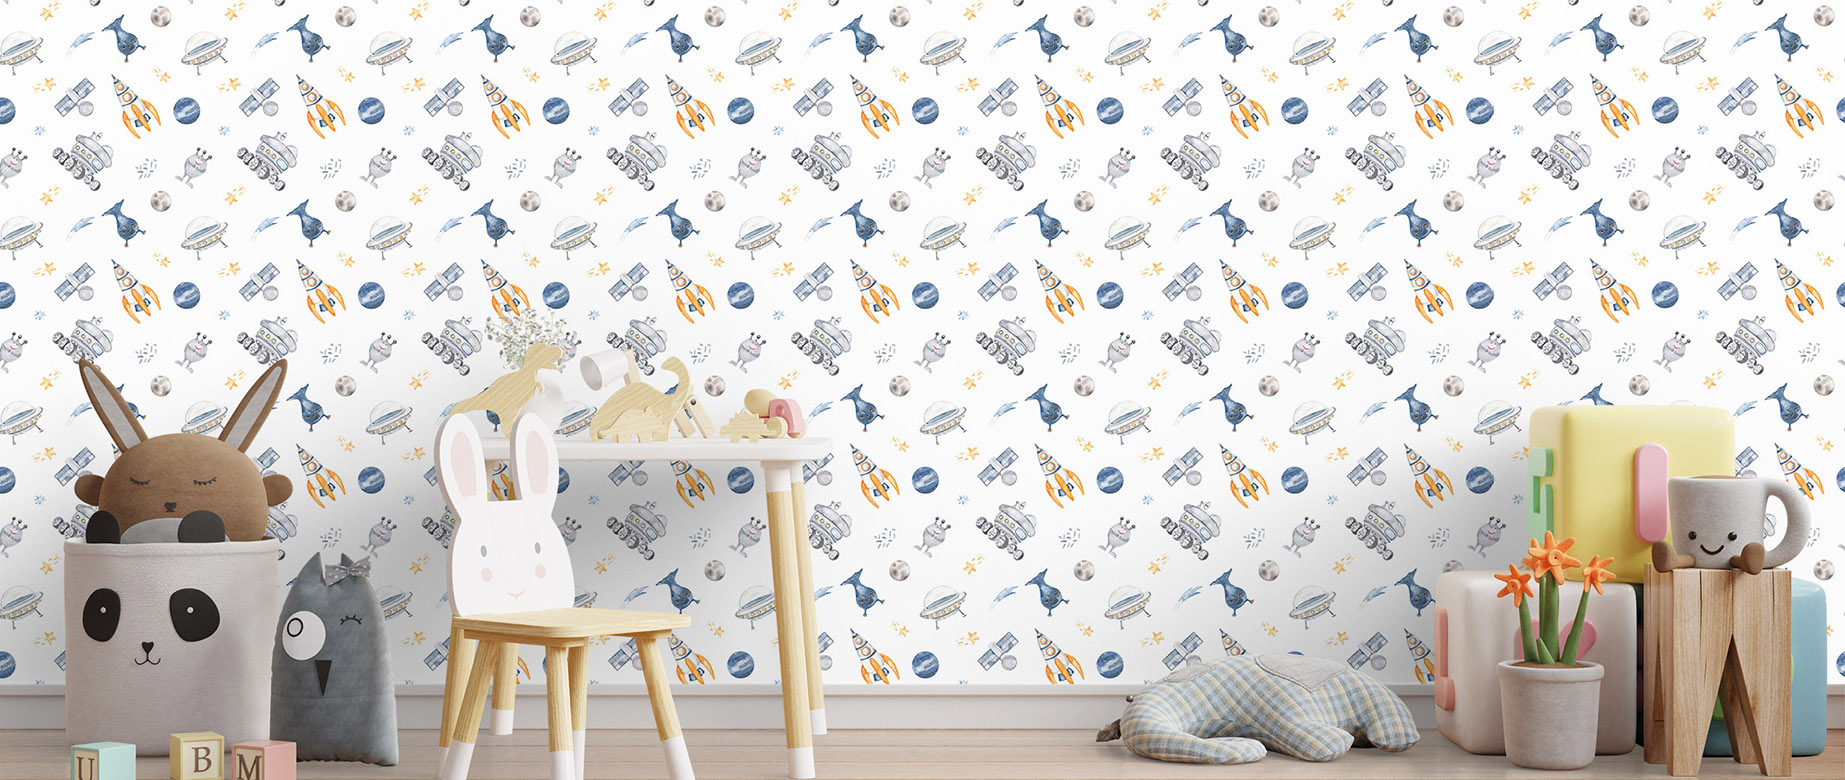 white-fun-design-Seamless design repeat pattern wallpaper-in-wide-room